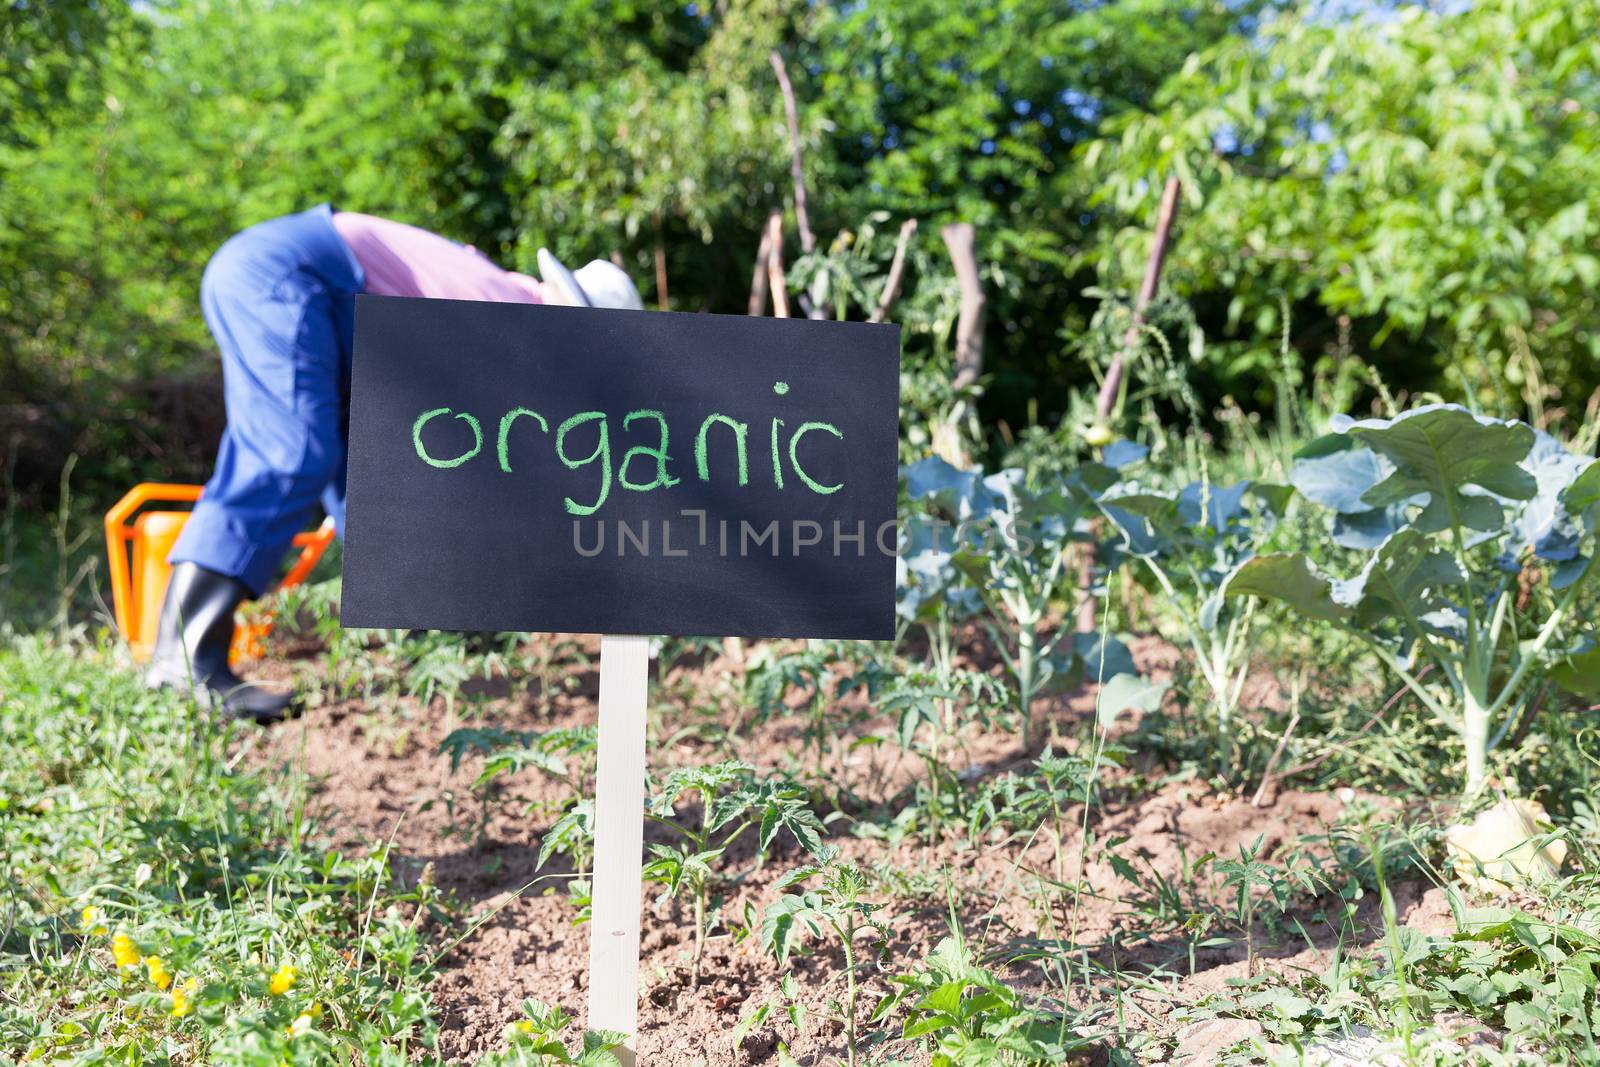 Organic vegetable garden by wellphoto